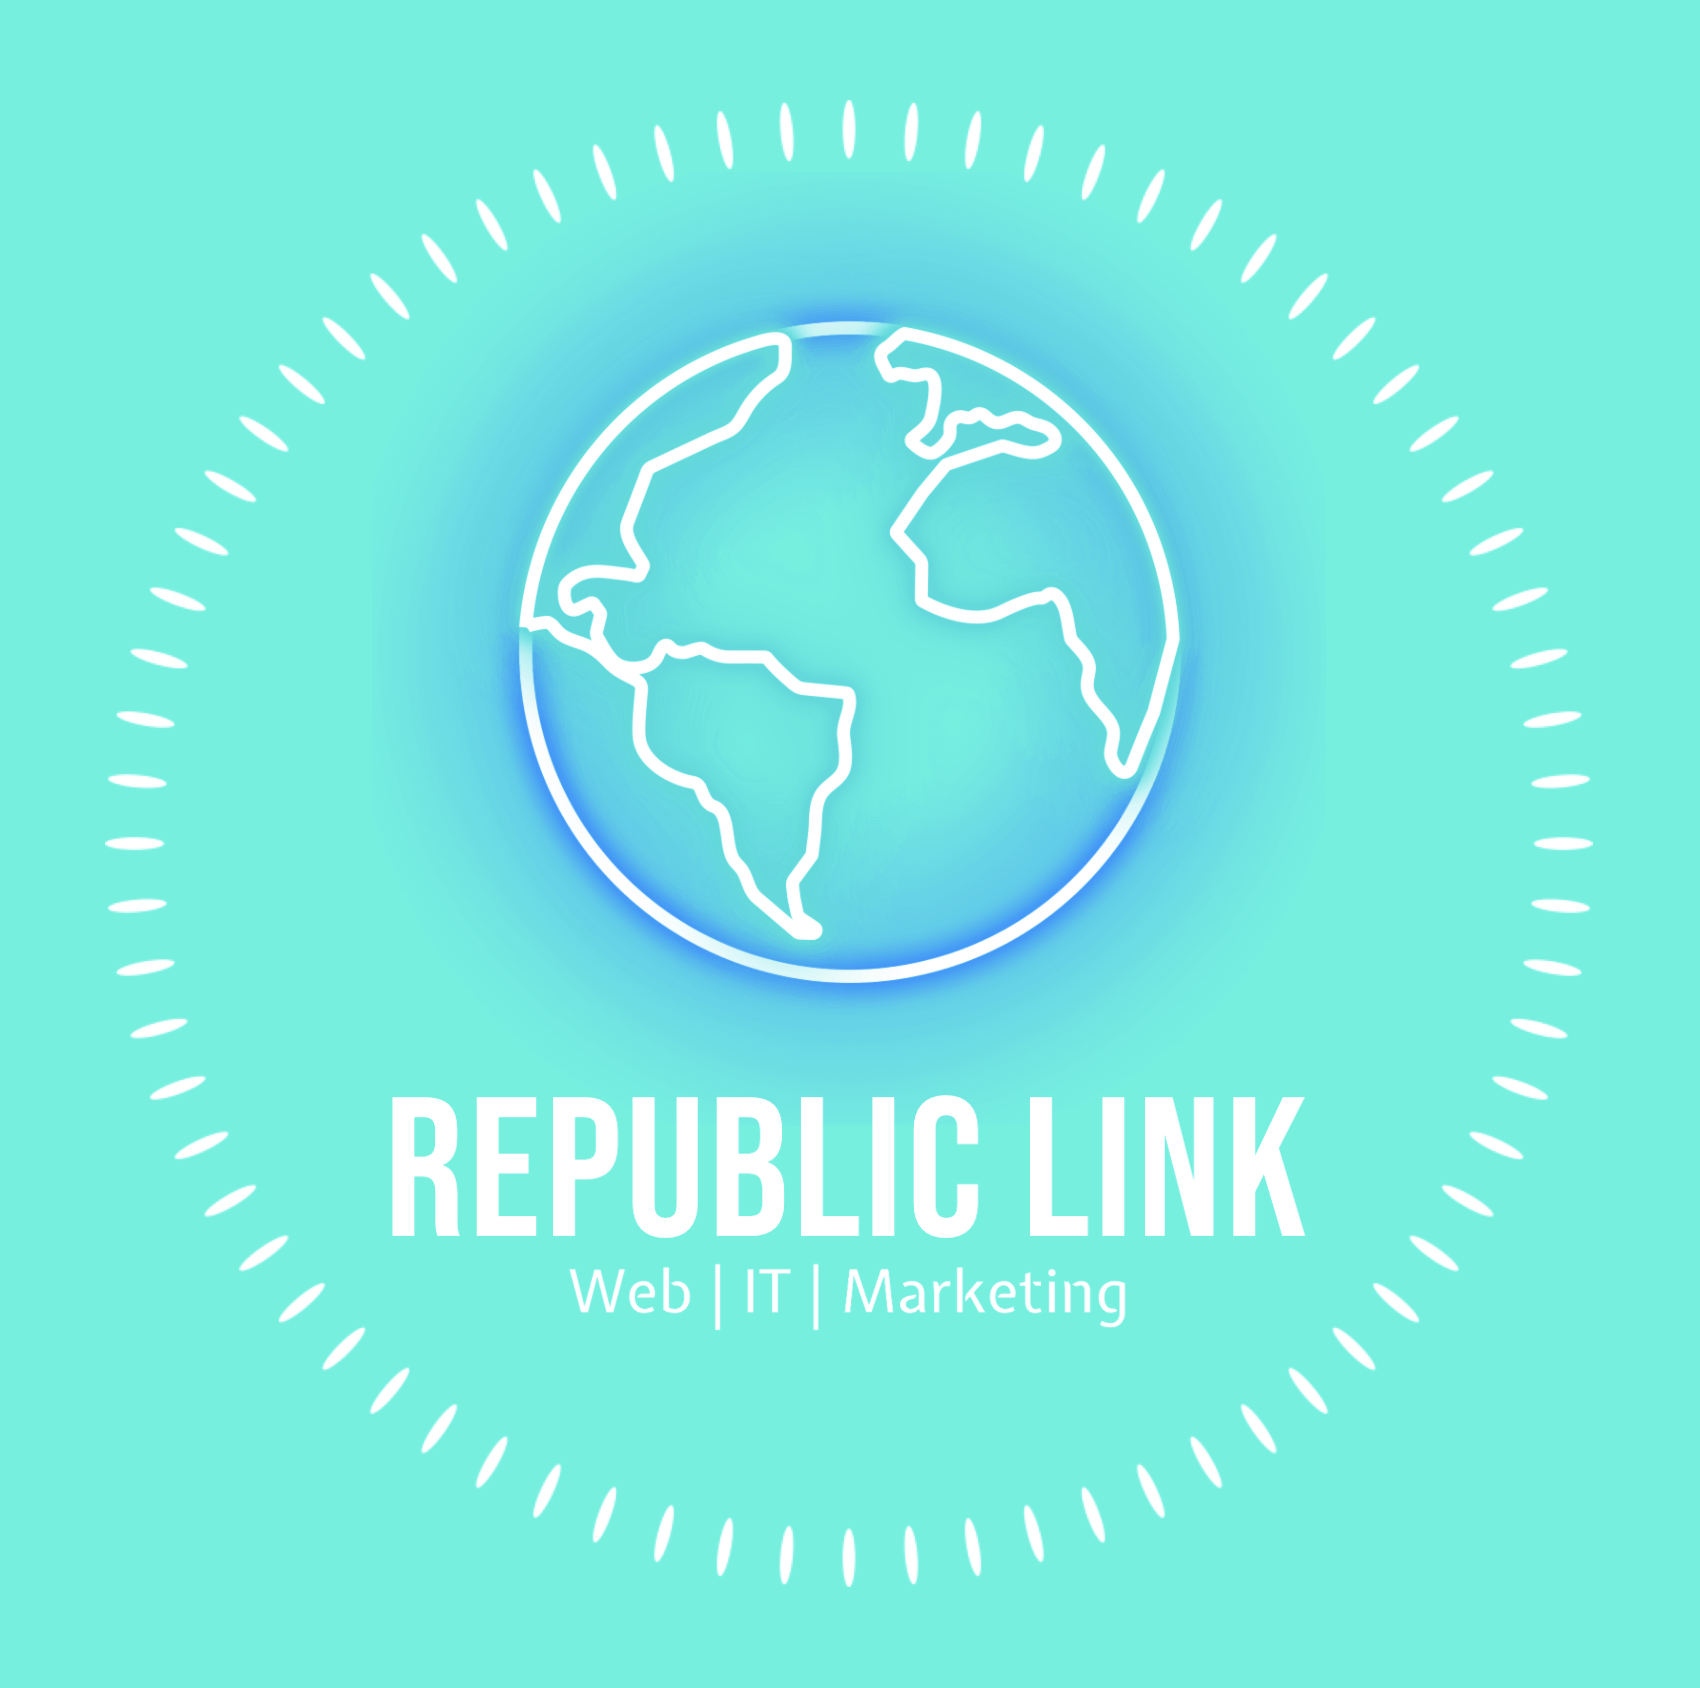 RepublicLink